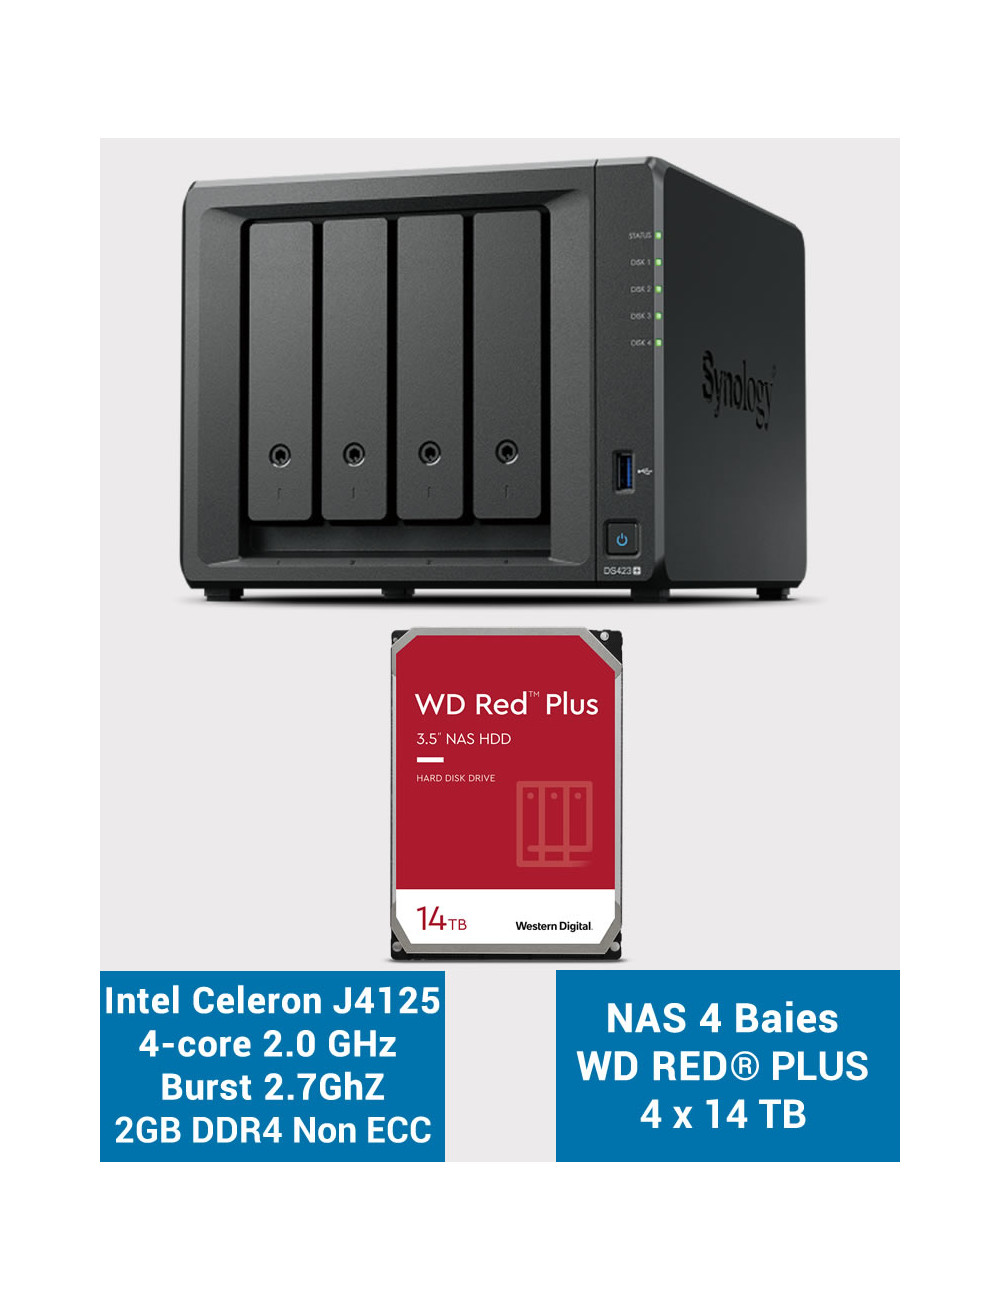 Synology DS423+ 2GB NAS Server WD RED PLUS 56TB (4x14TB)